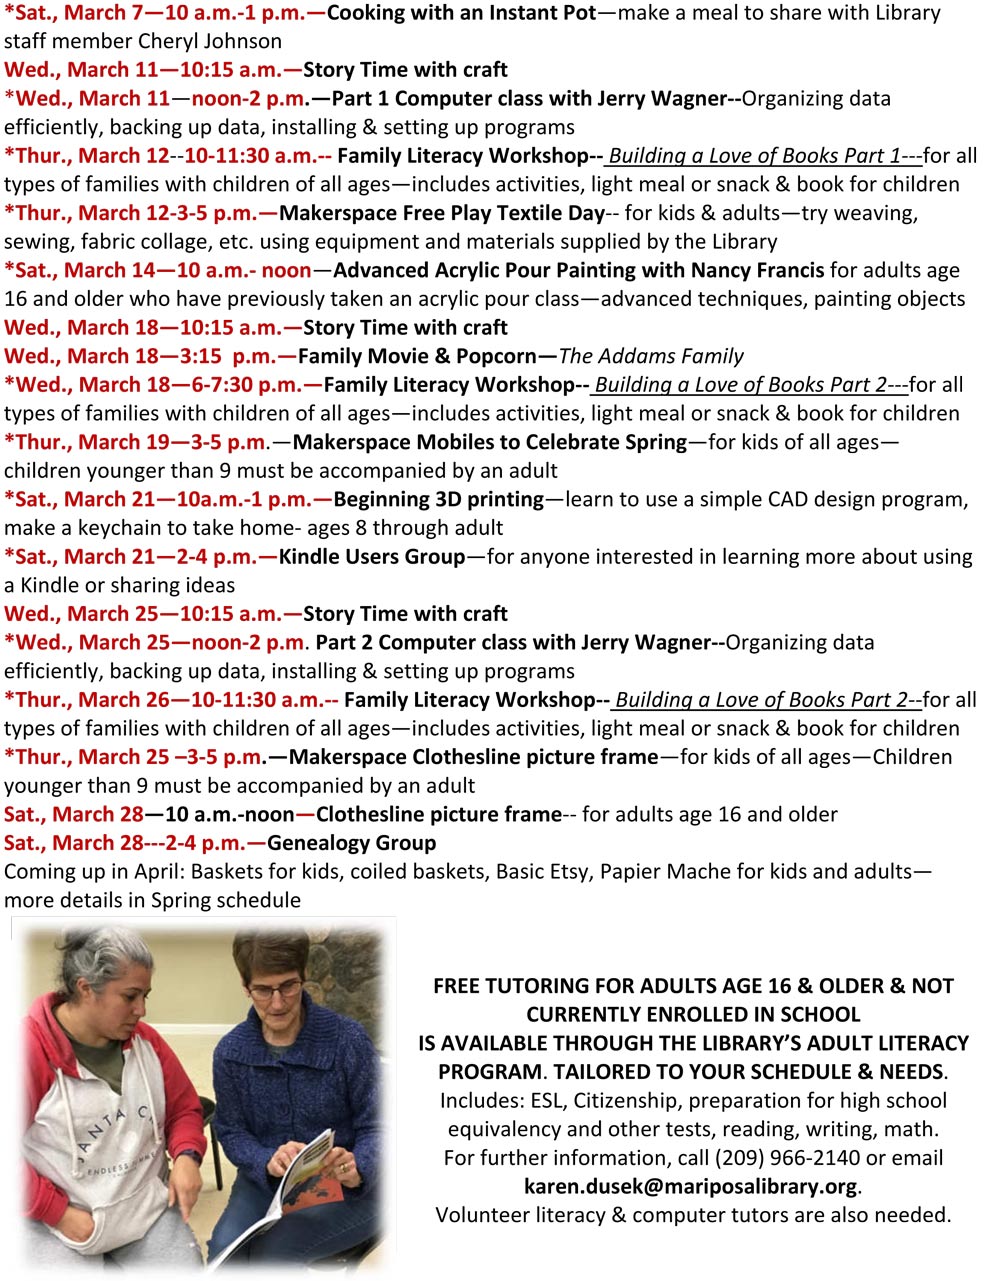 Mariposa Library Winter Schedule 3